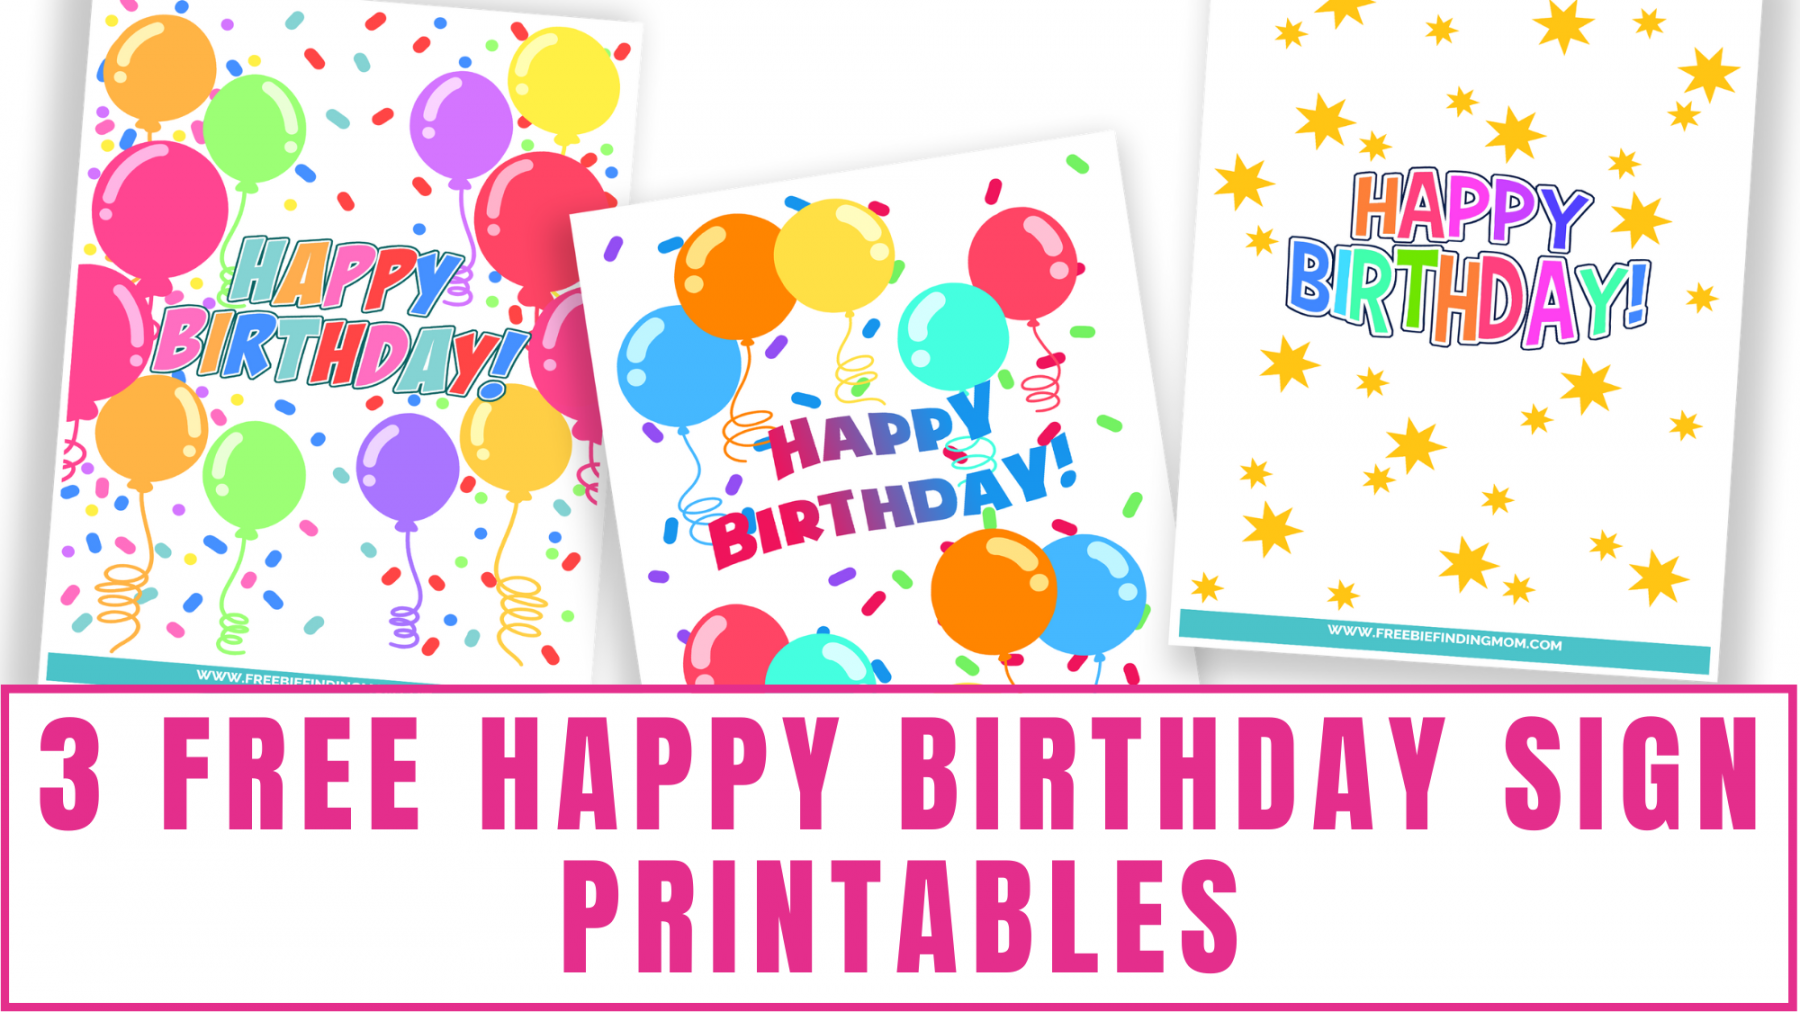 Free Printable Happy Birthday Signs - Printable -  Free Happy Birthday Sign Printables - Freebie Finding Mom